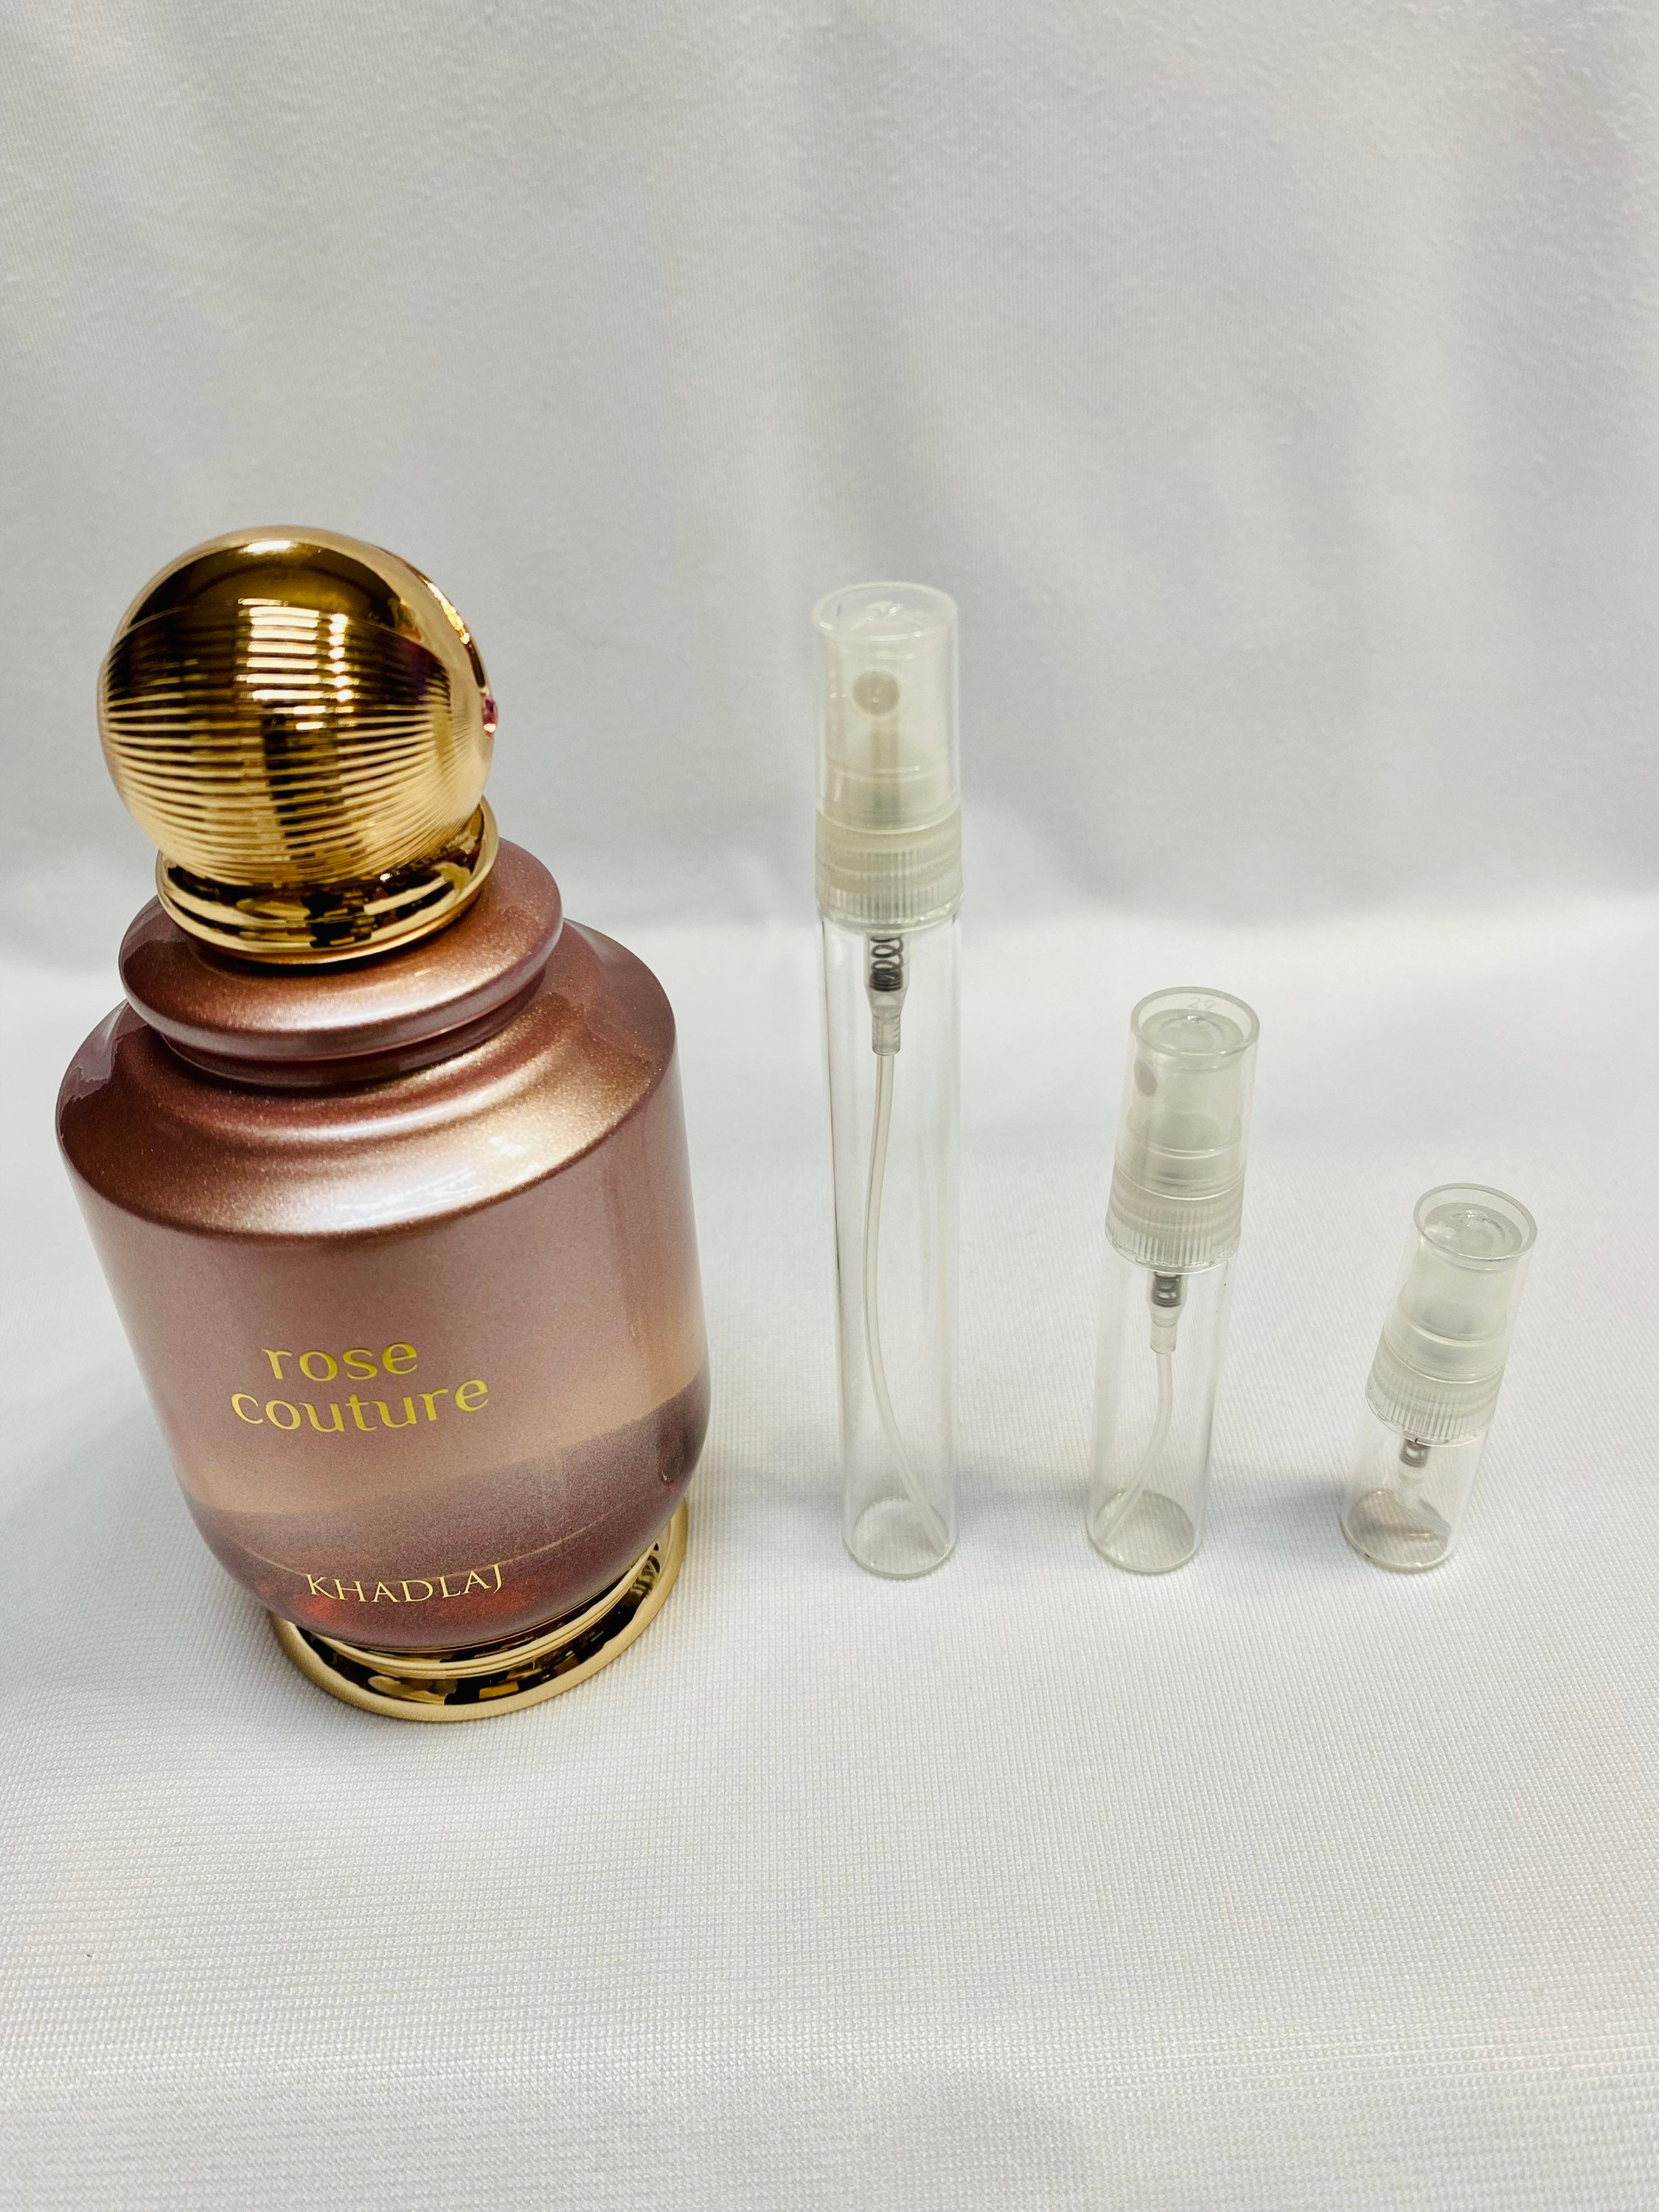 Acqua di Giò Parfum Giorgio Armani cologne - a new fragrance for men 2023